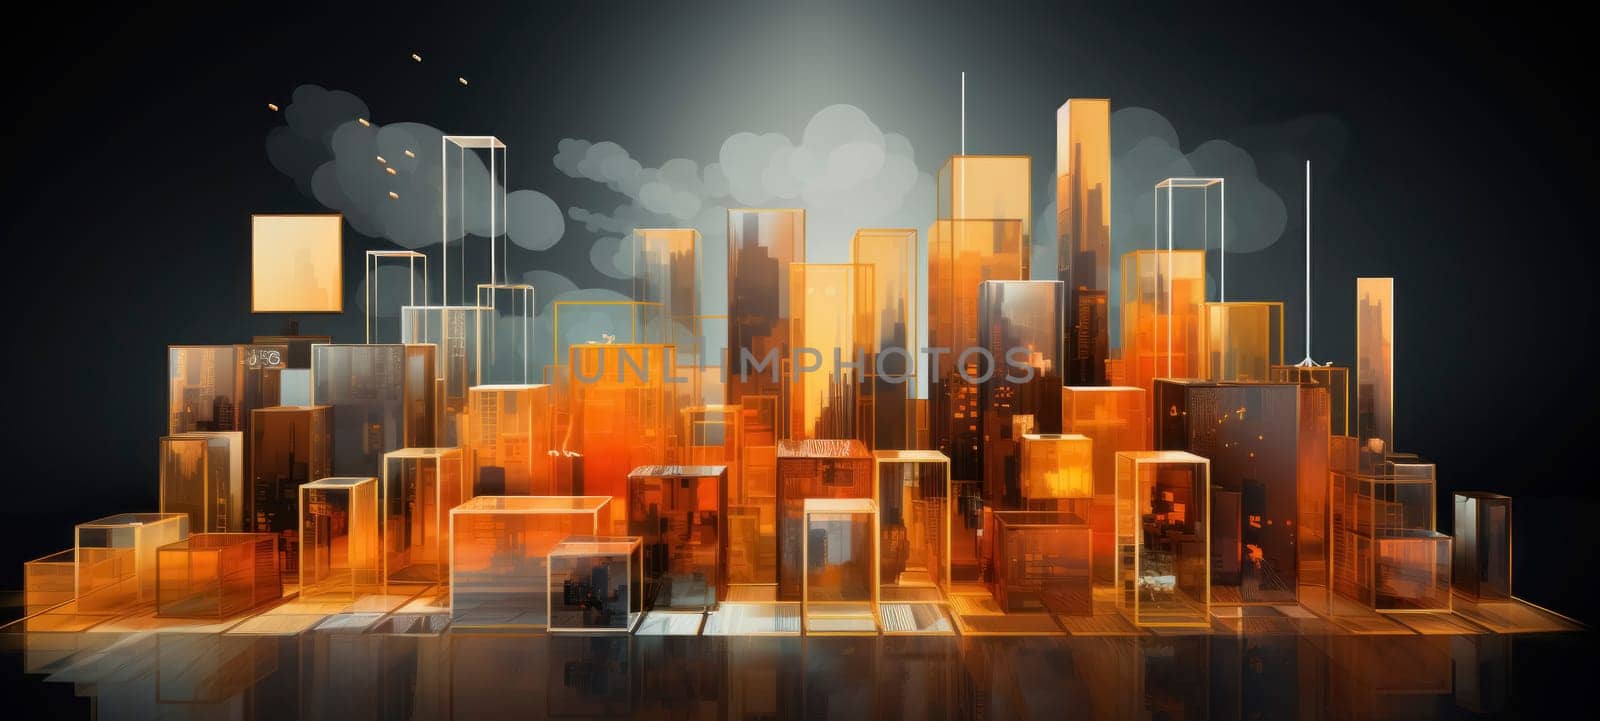 Stylized Digital Skyline with Luminous Transparent Buildings by andreyz